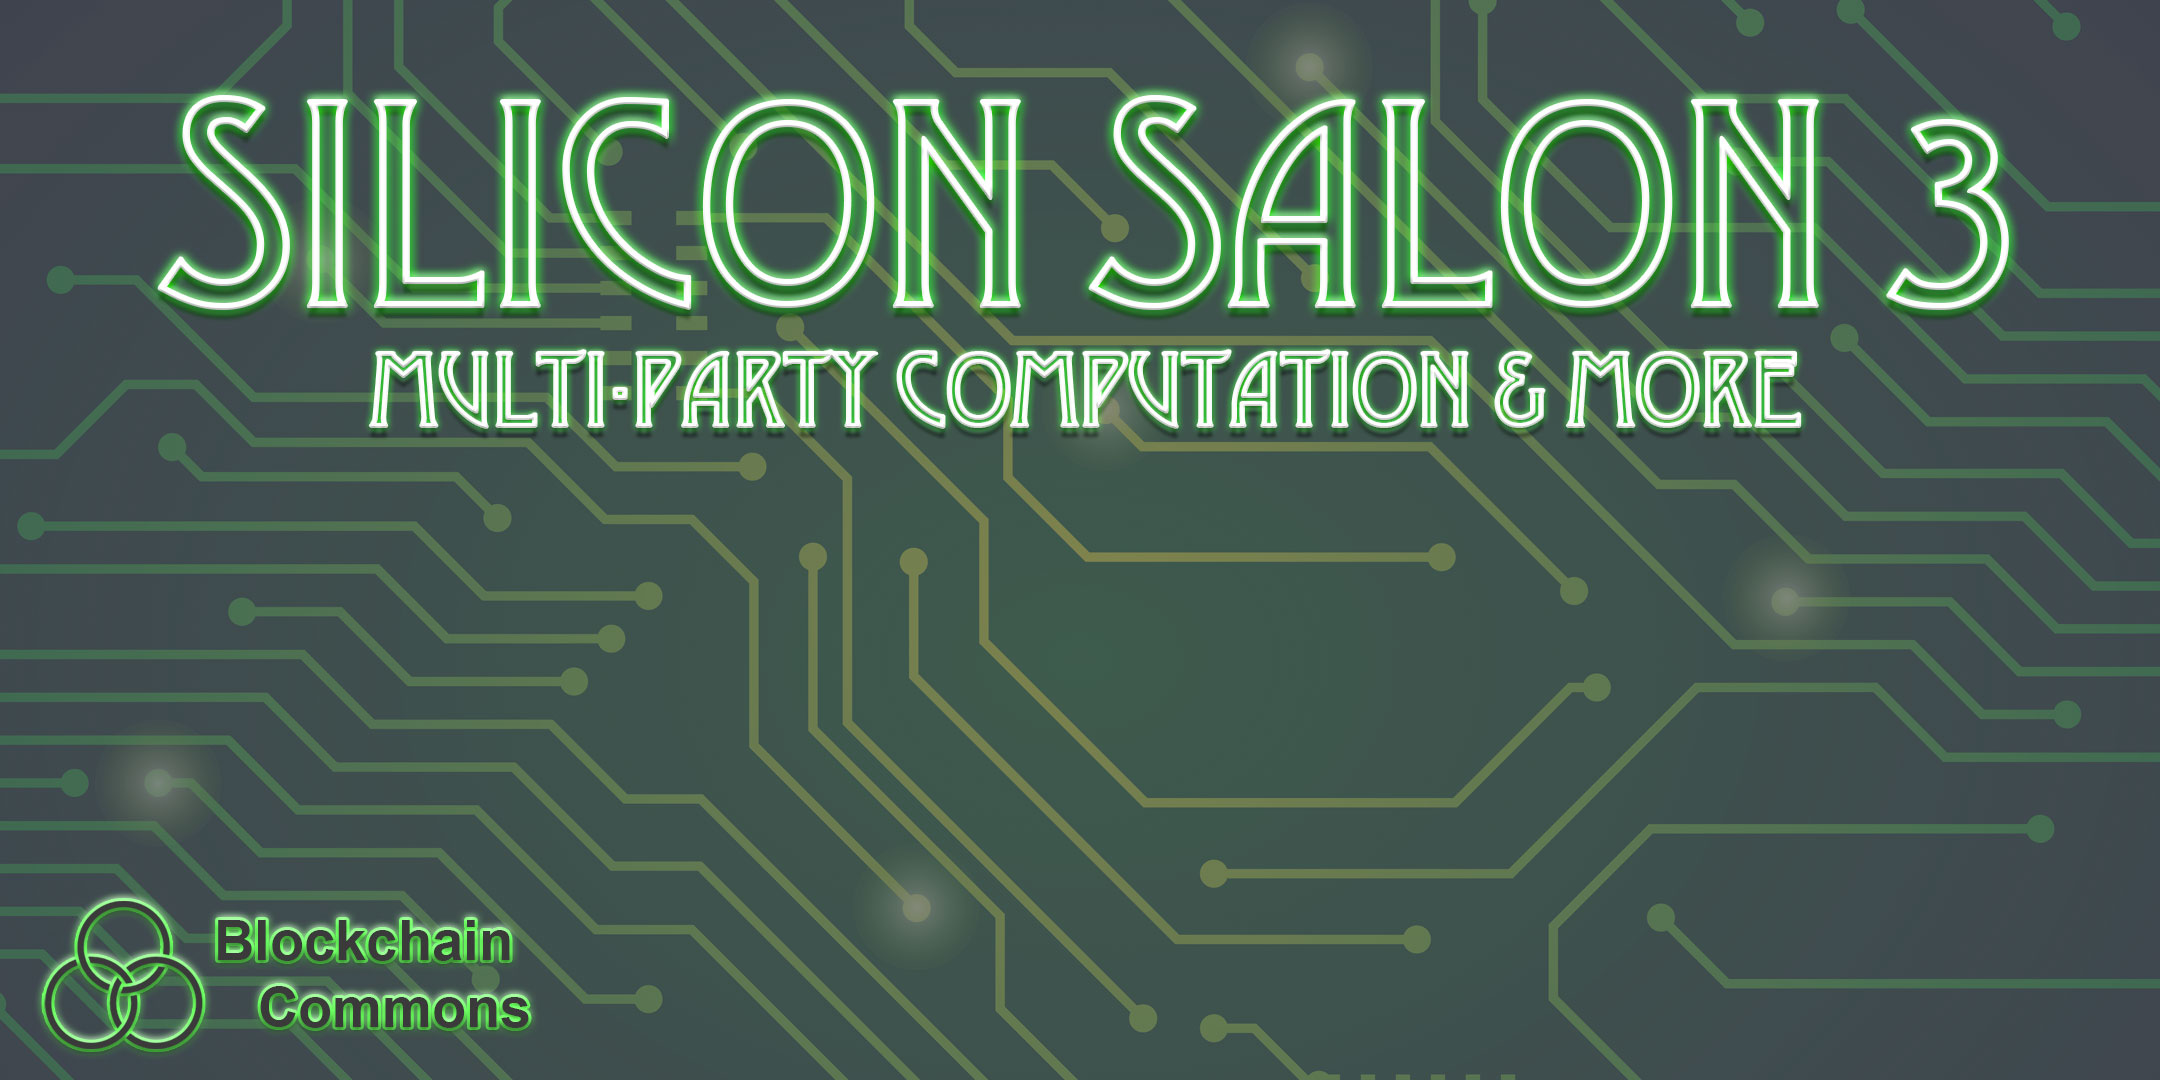 Silicon Salon 3 Call for Contributions